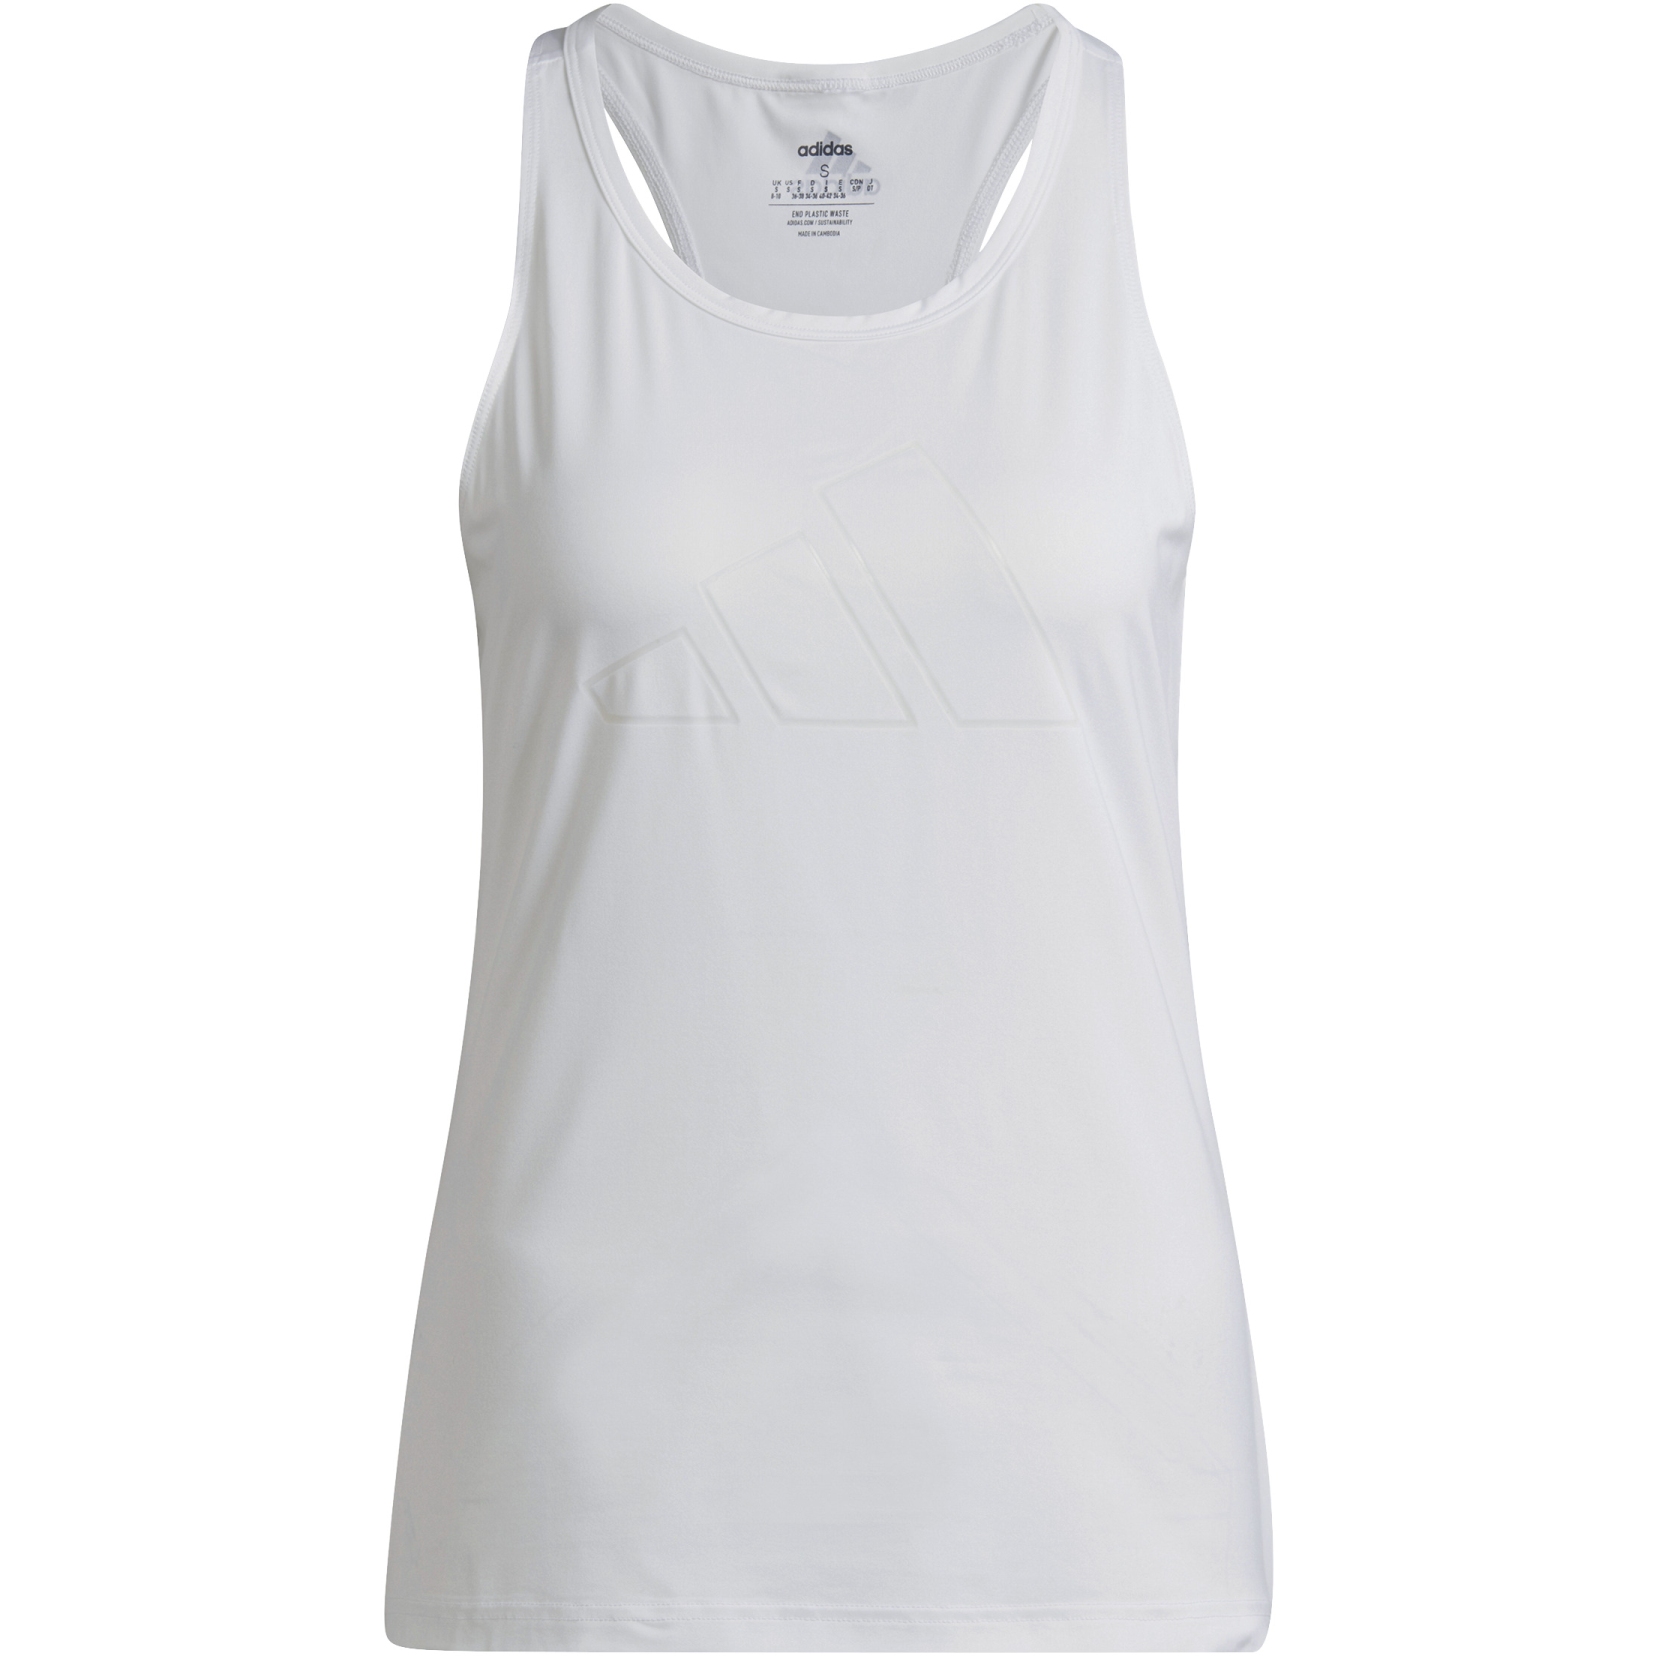 Camiseta tirantes adidas mujer Hiit blanca